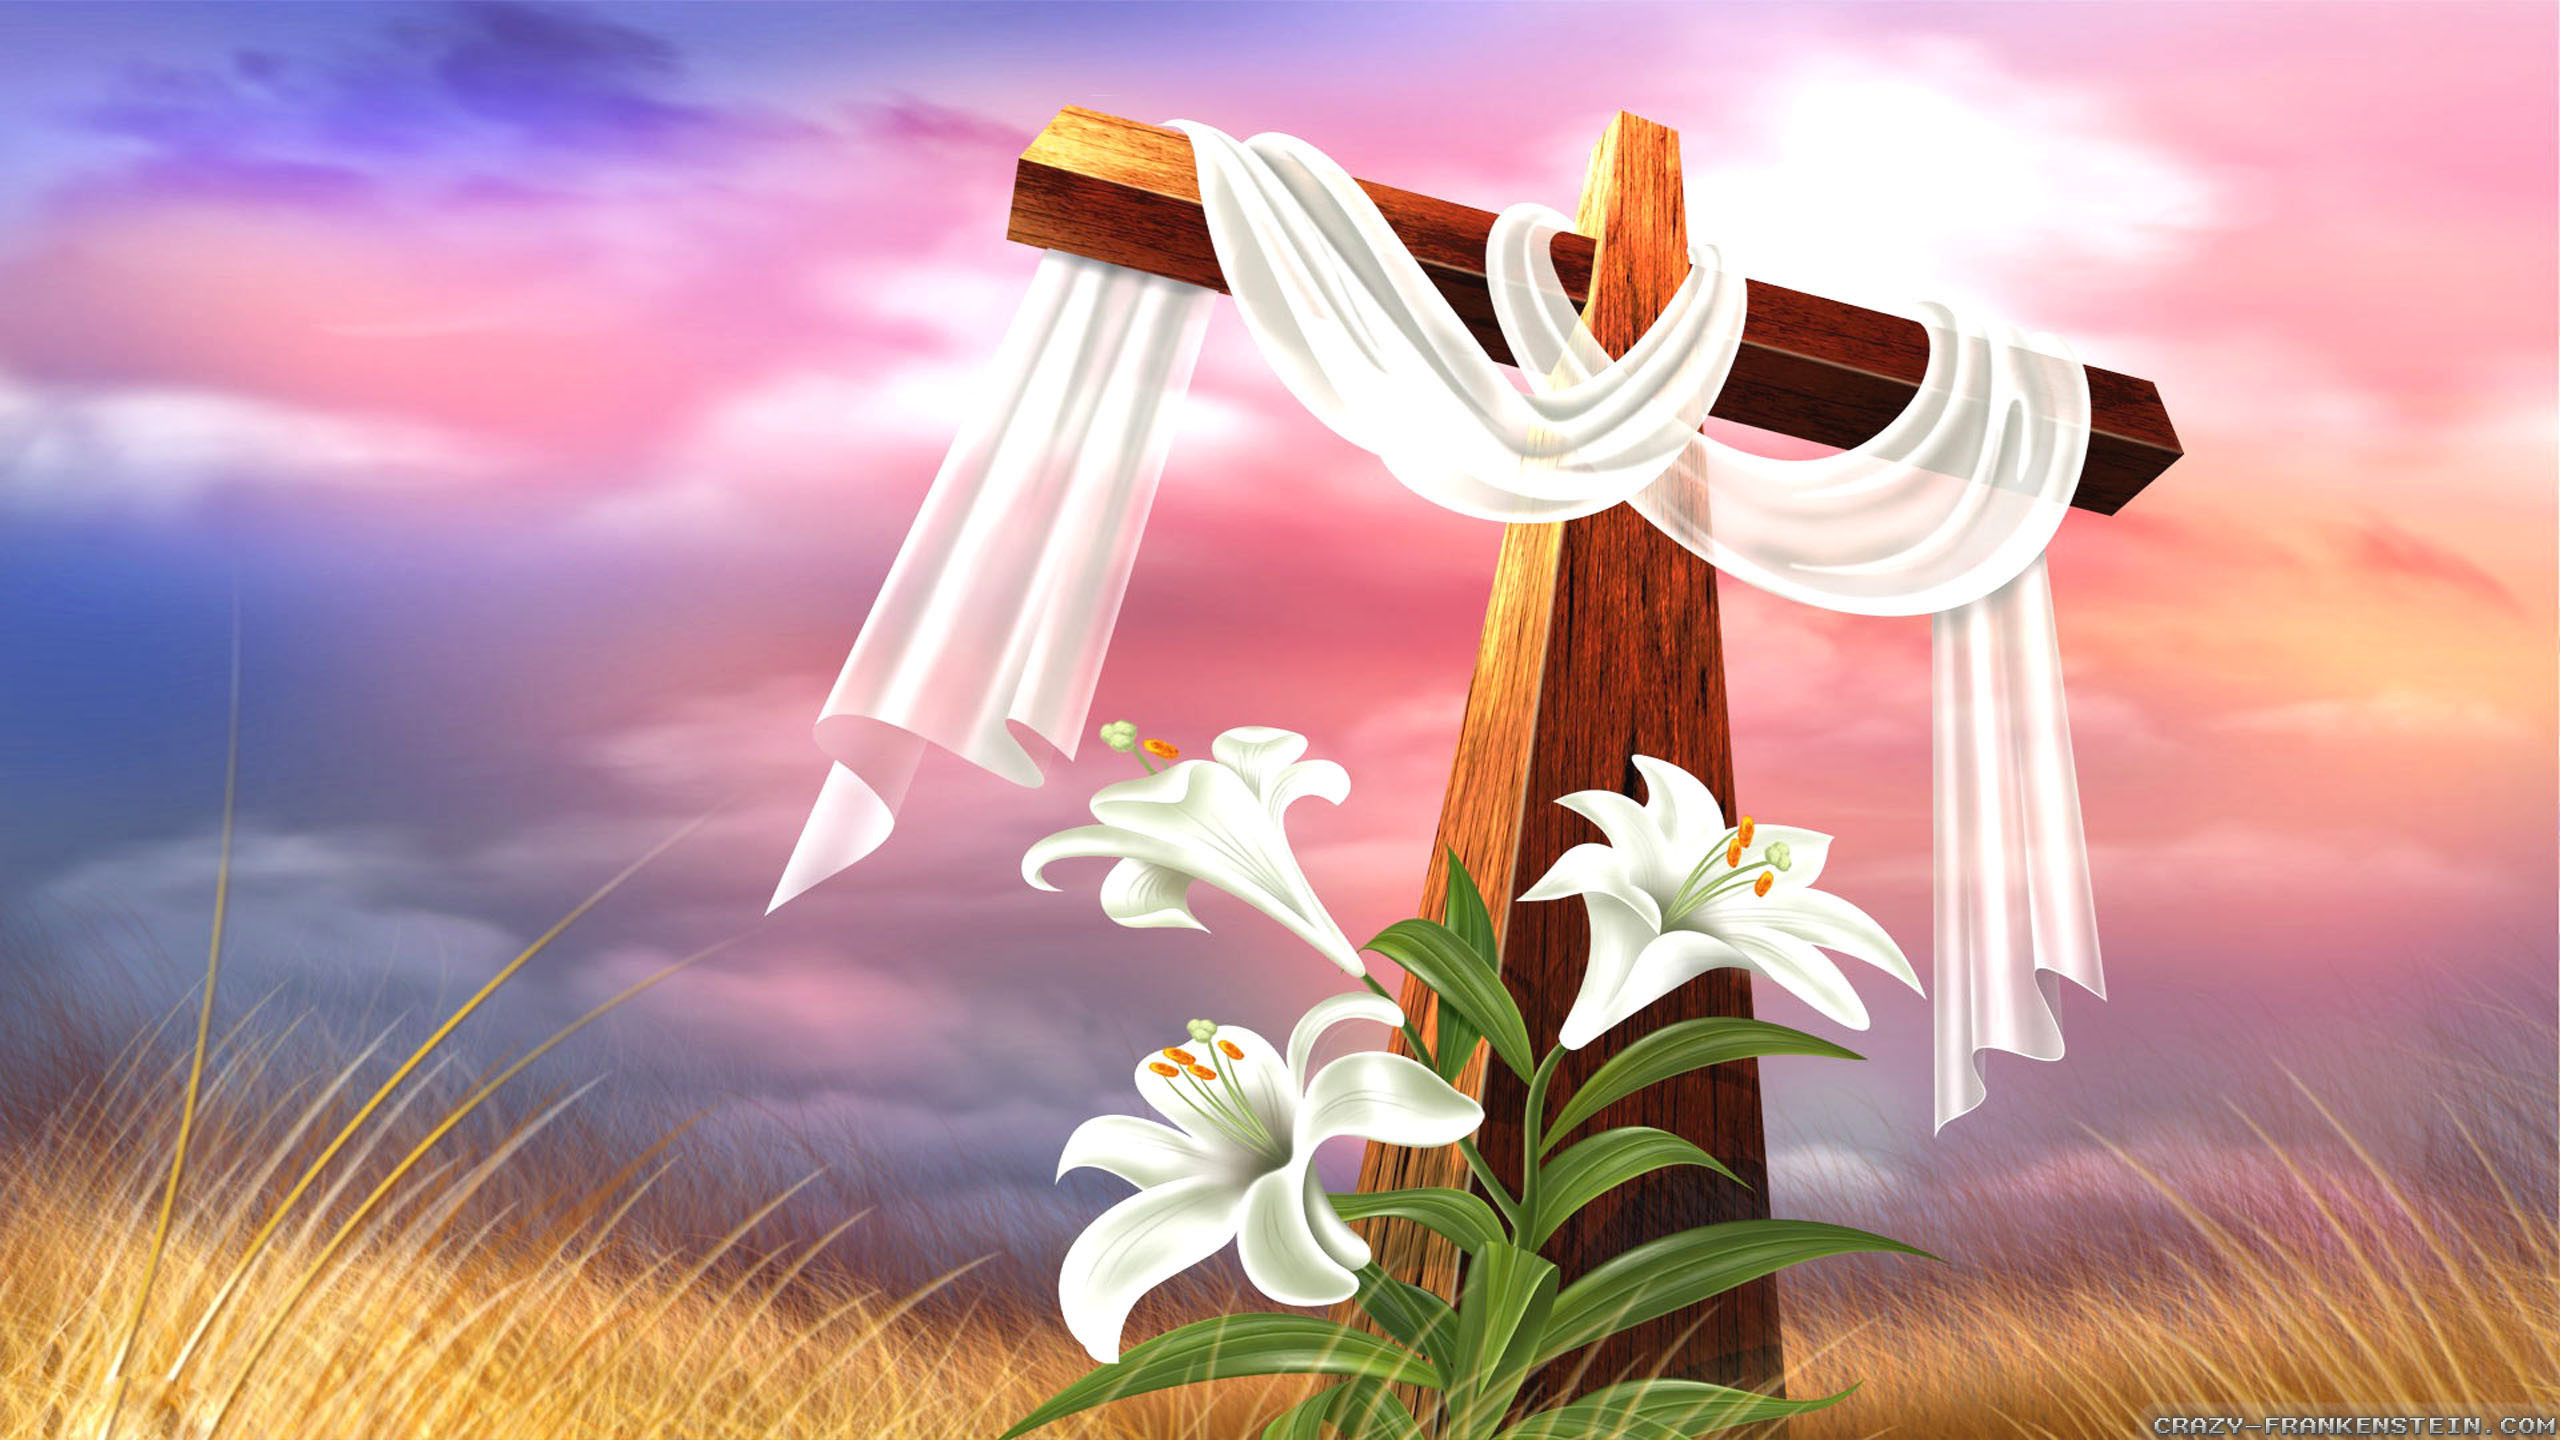 Christian Easter Desktop Wallpaper - Good Friday Easter 2018 - HD Wallpaper 